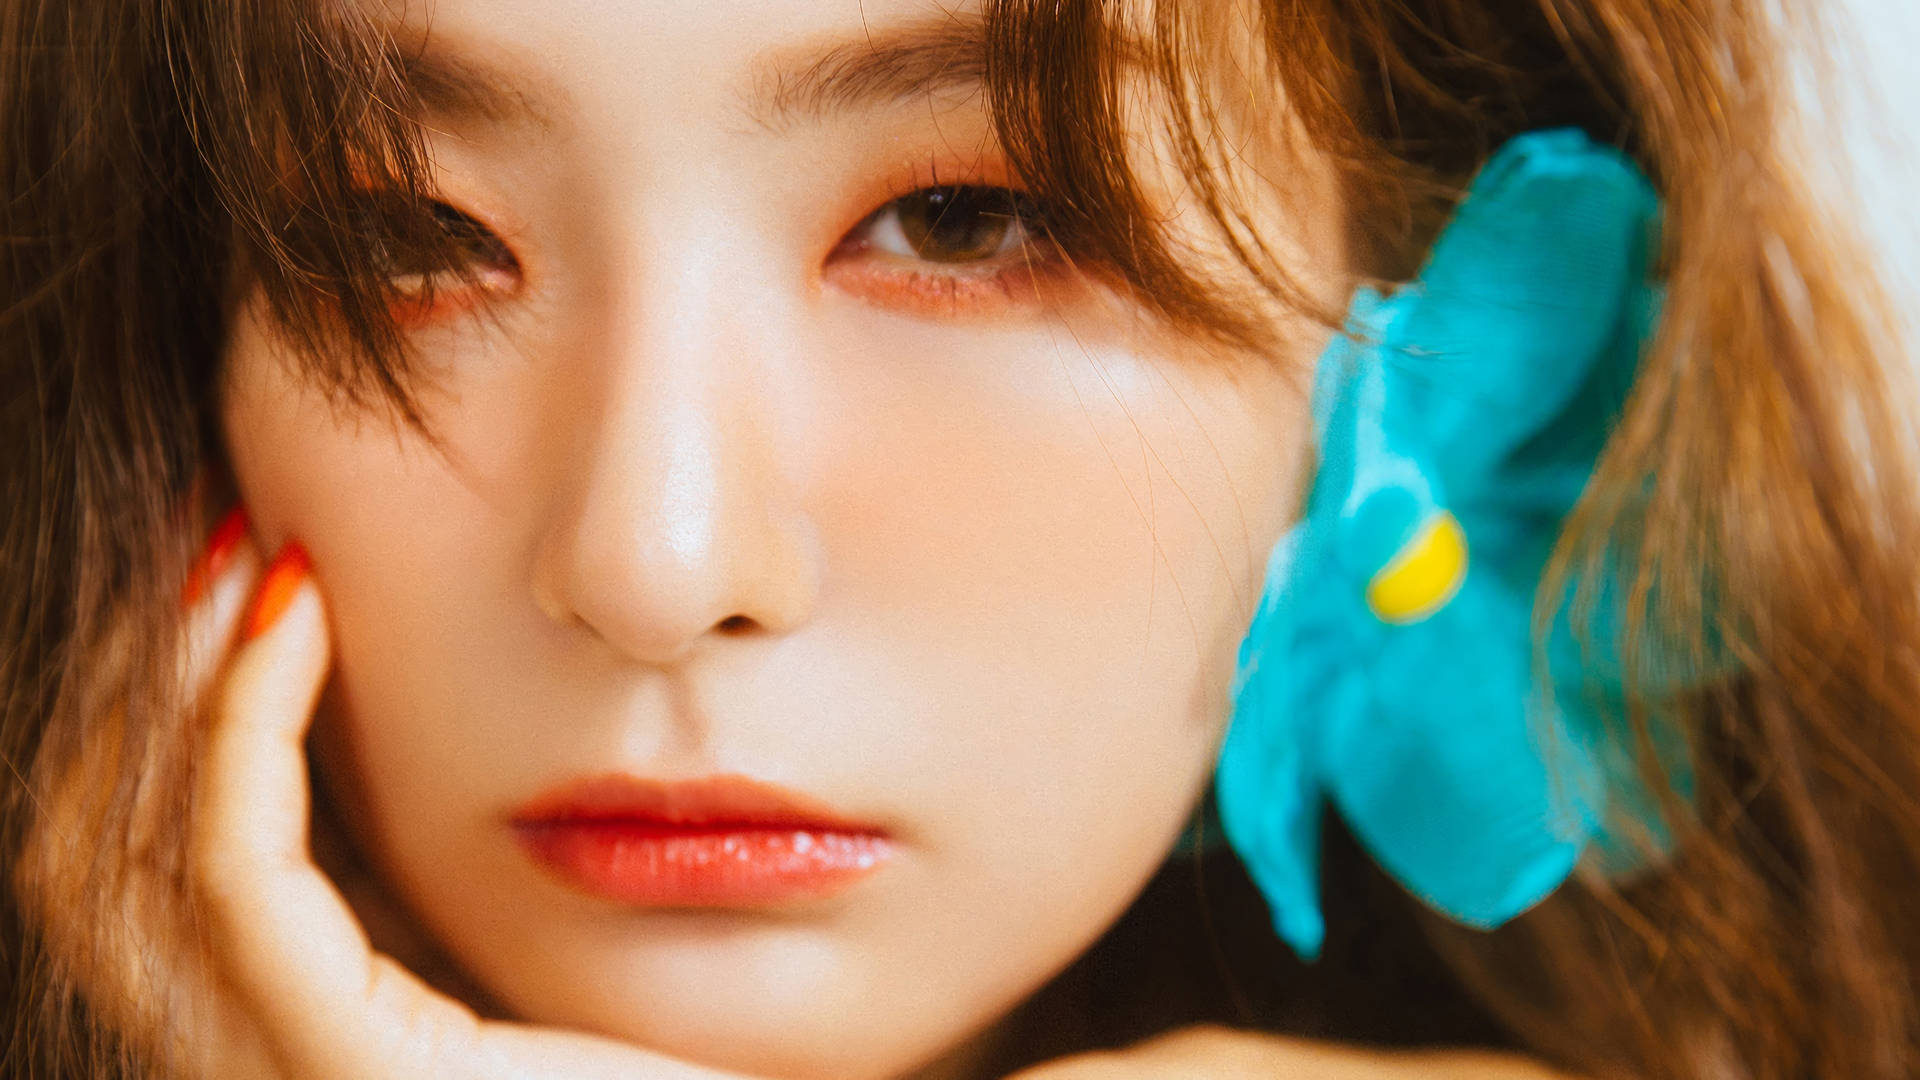 Red Velvet Seulgi Close-up Background